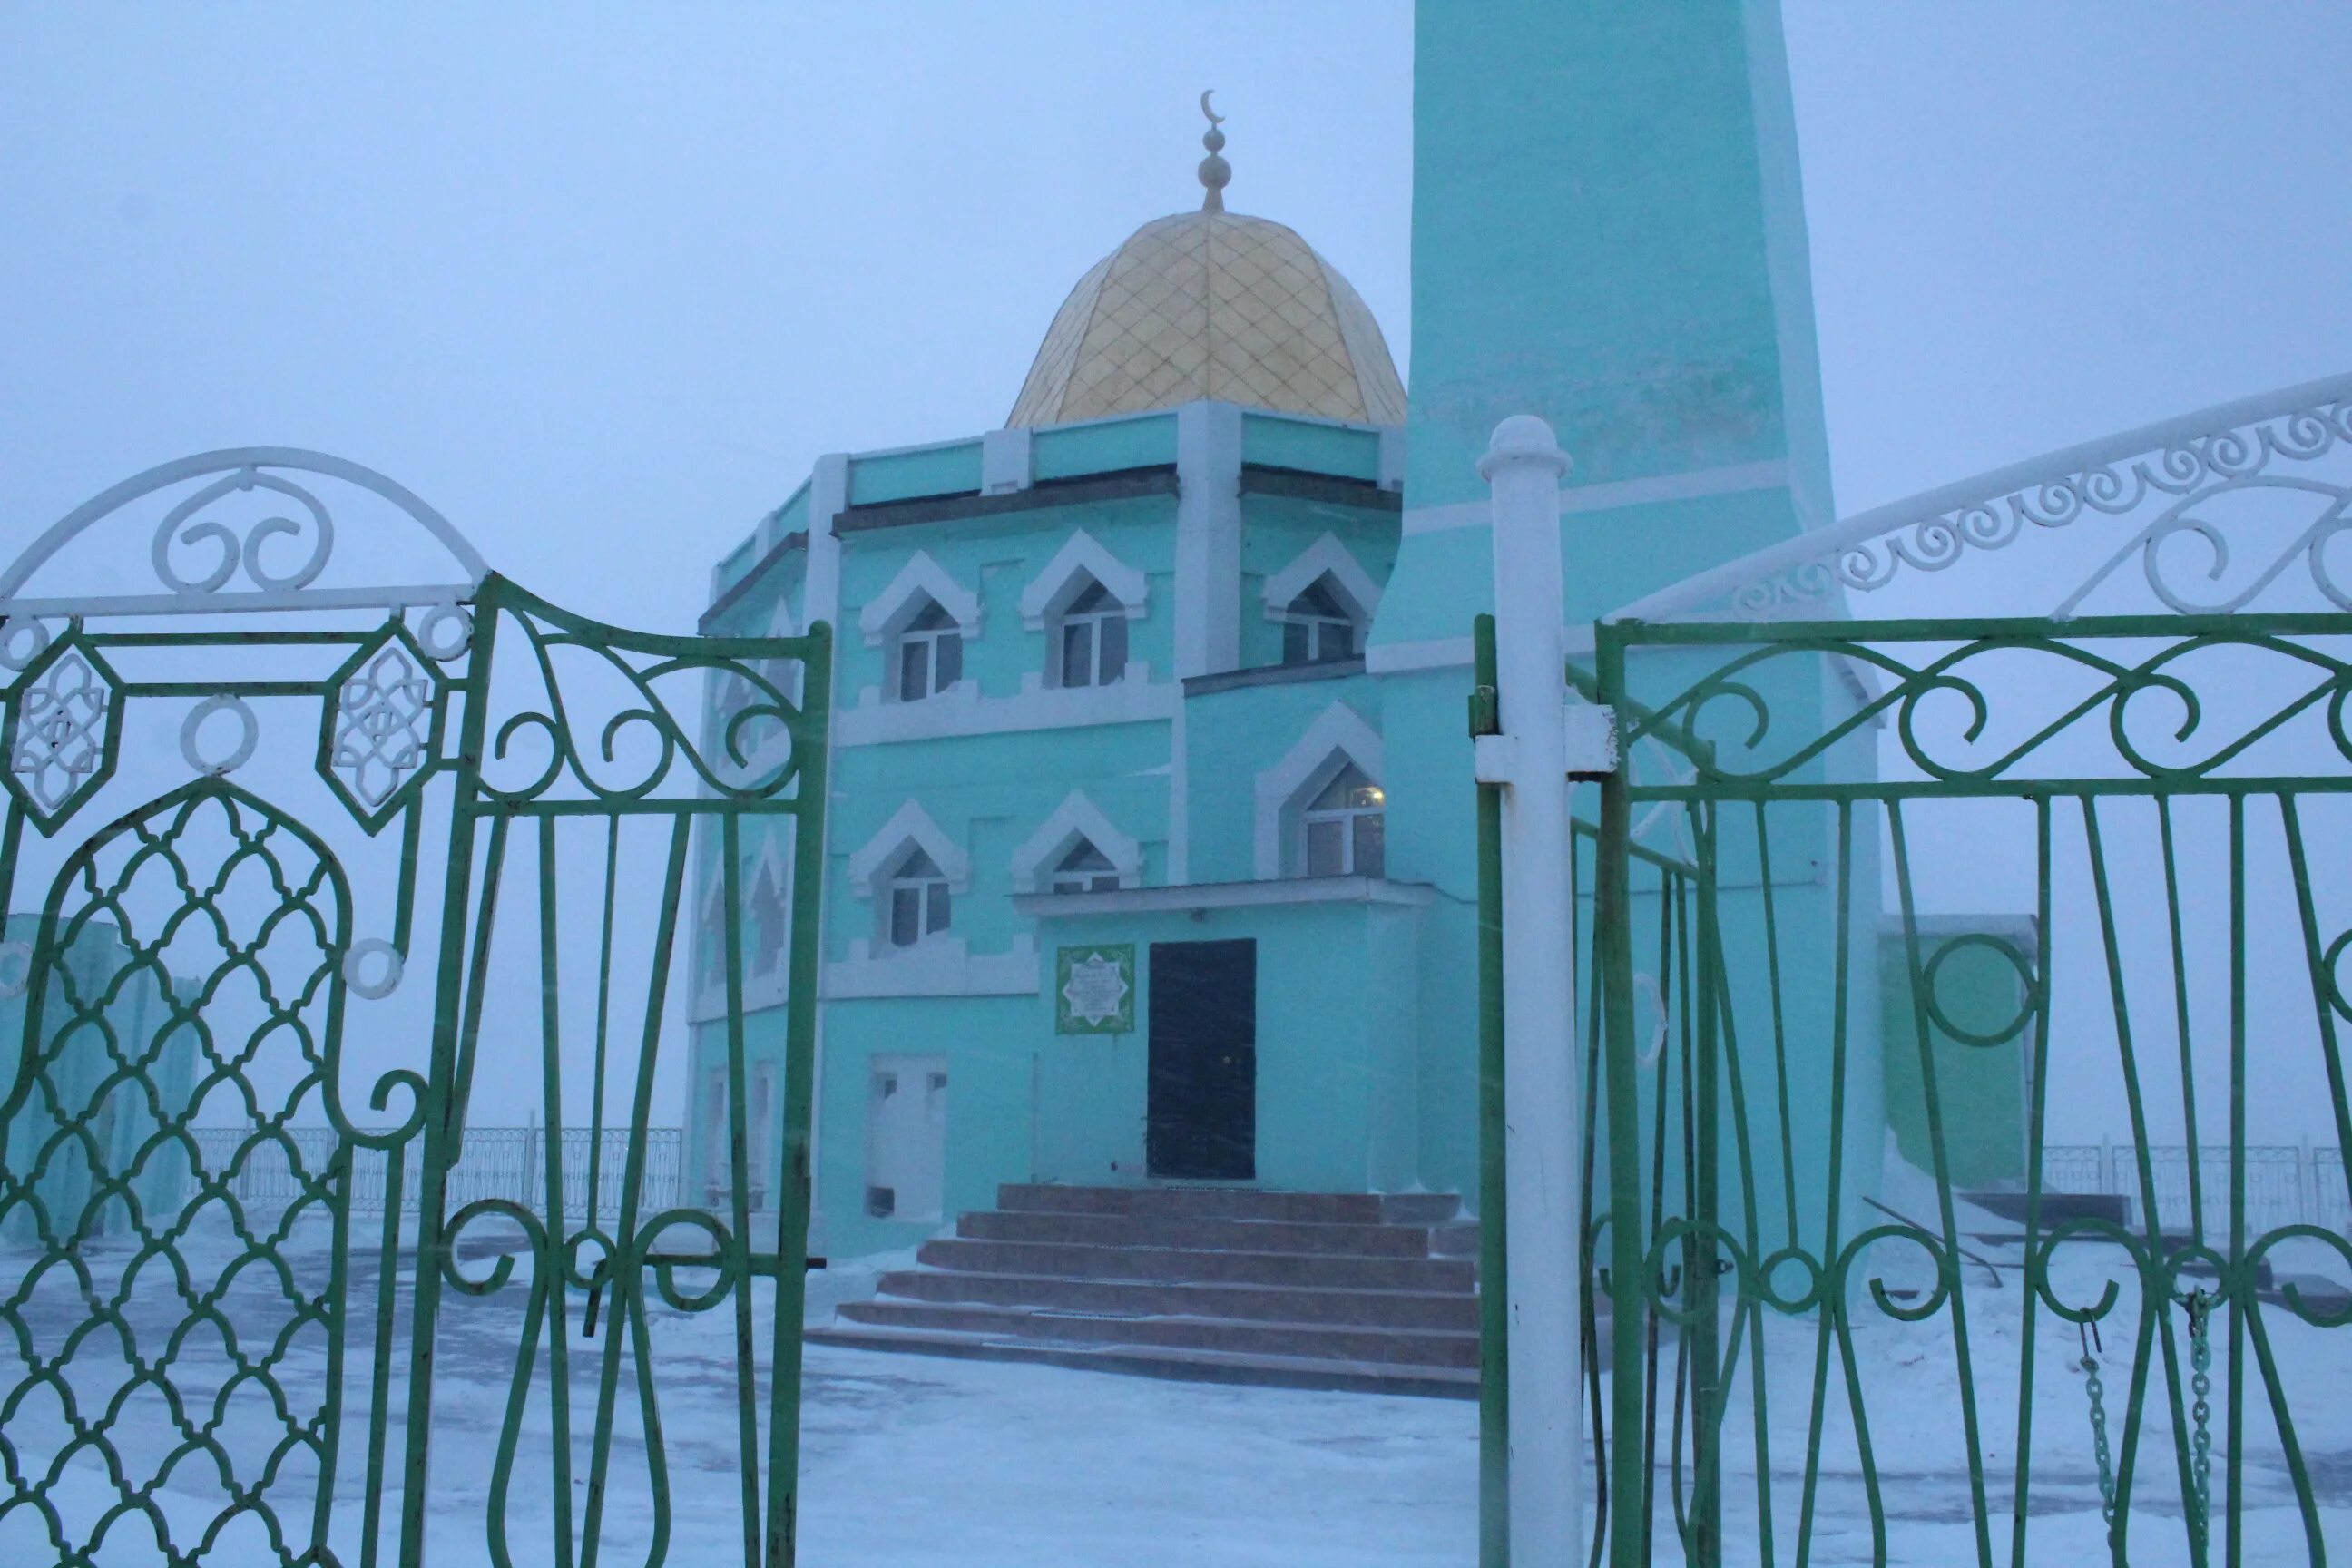 Мечеть Нурд-Камаль. Мечеть Нурд-Камаль Салехард. Г Норильск мечеть Нурд-Камаль. Нурд-Камал — мечеть в городе Норильск. Нурд камаль